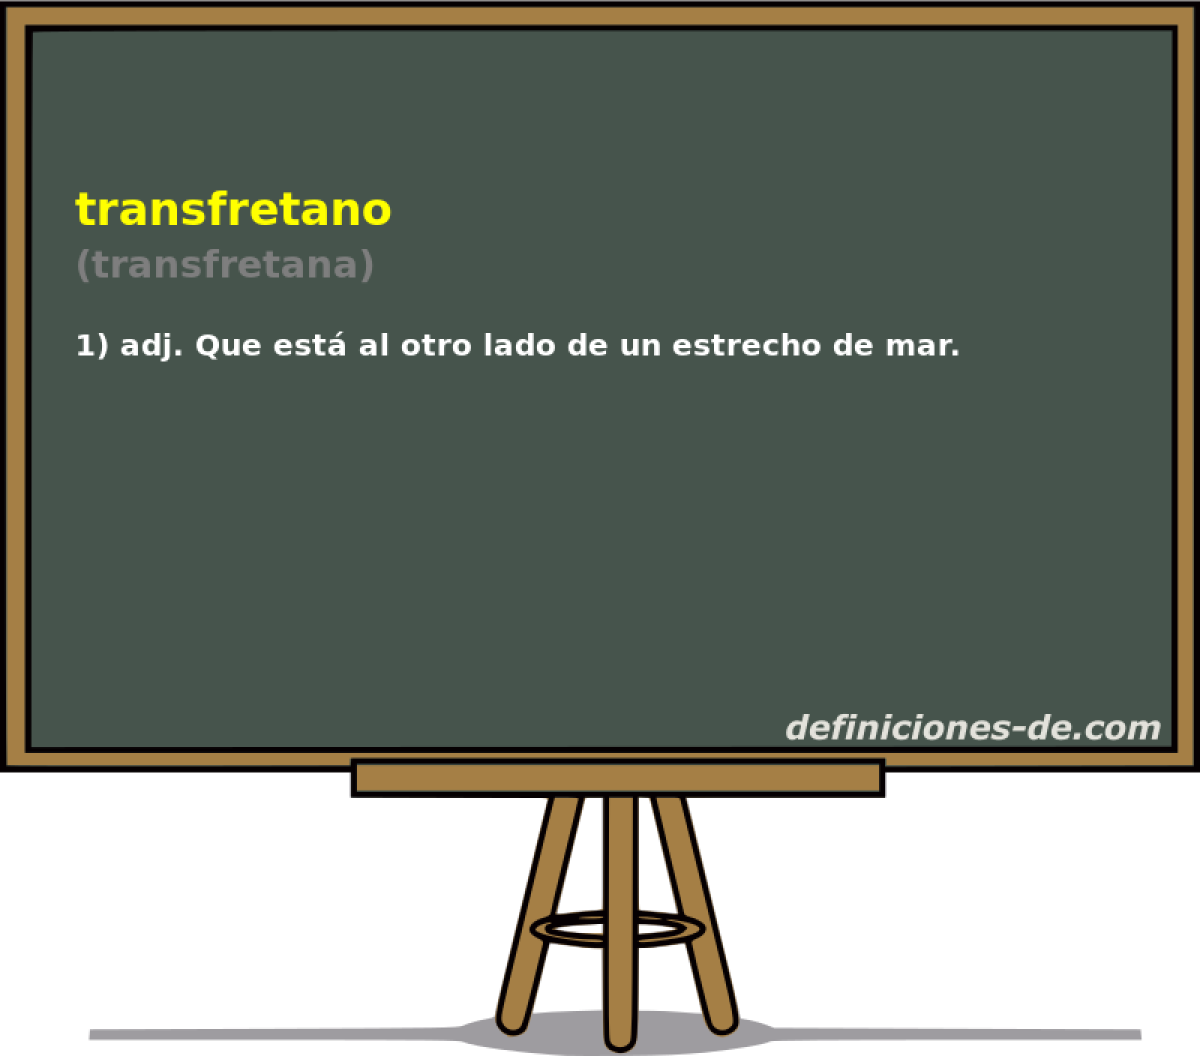 transfretano (transfretana)